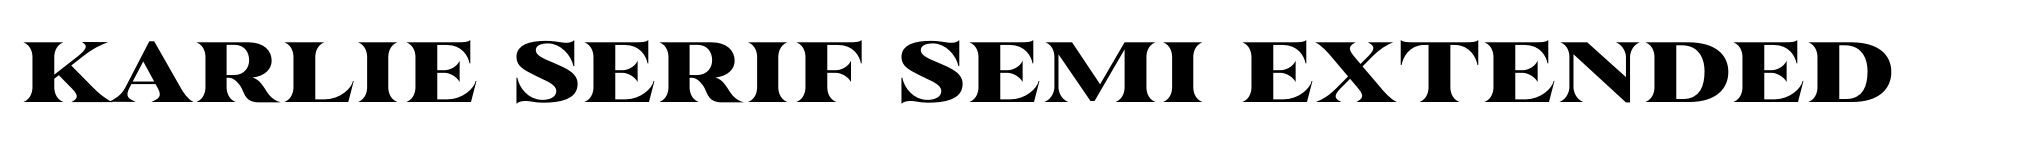 Karlie Serif Semi Extended image